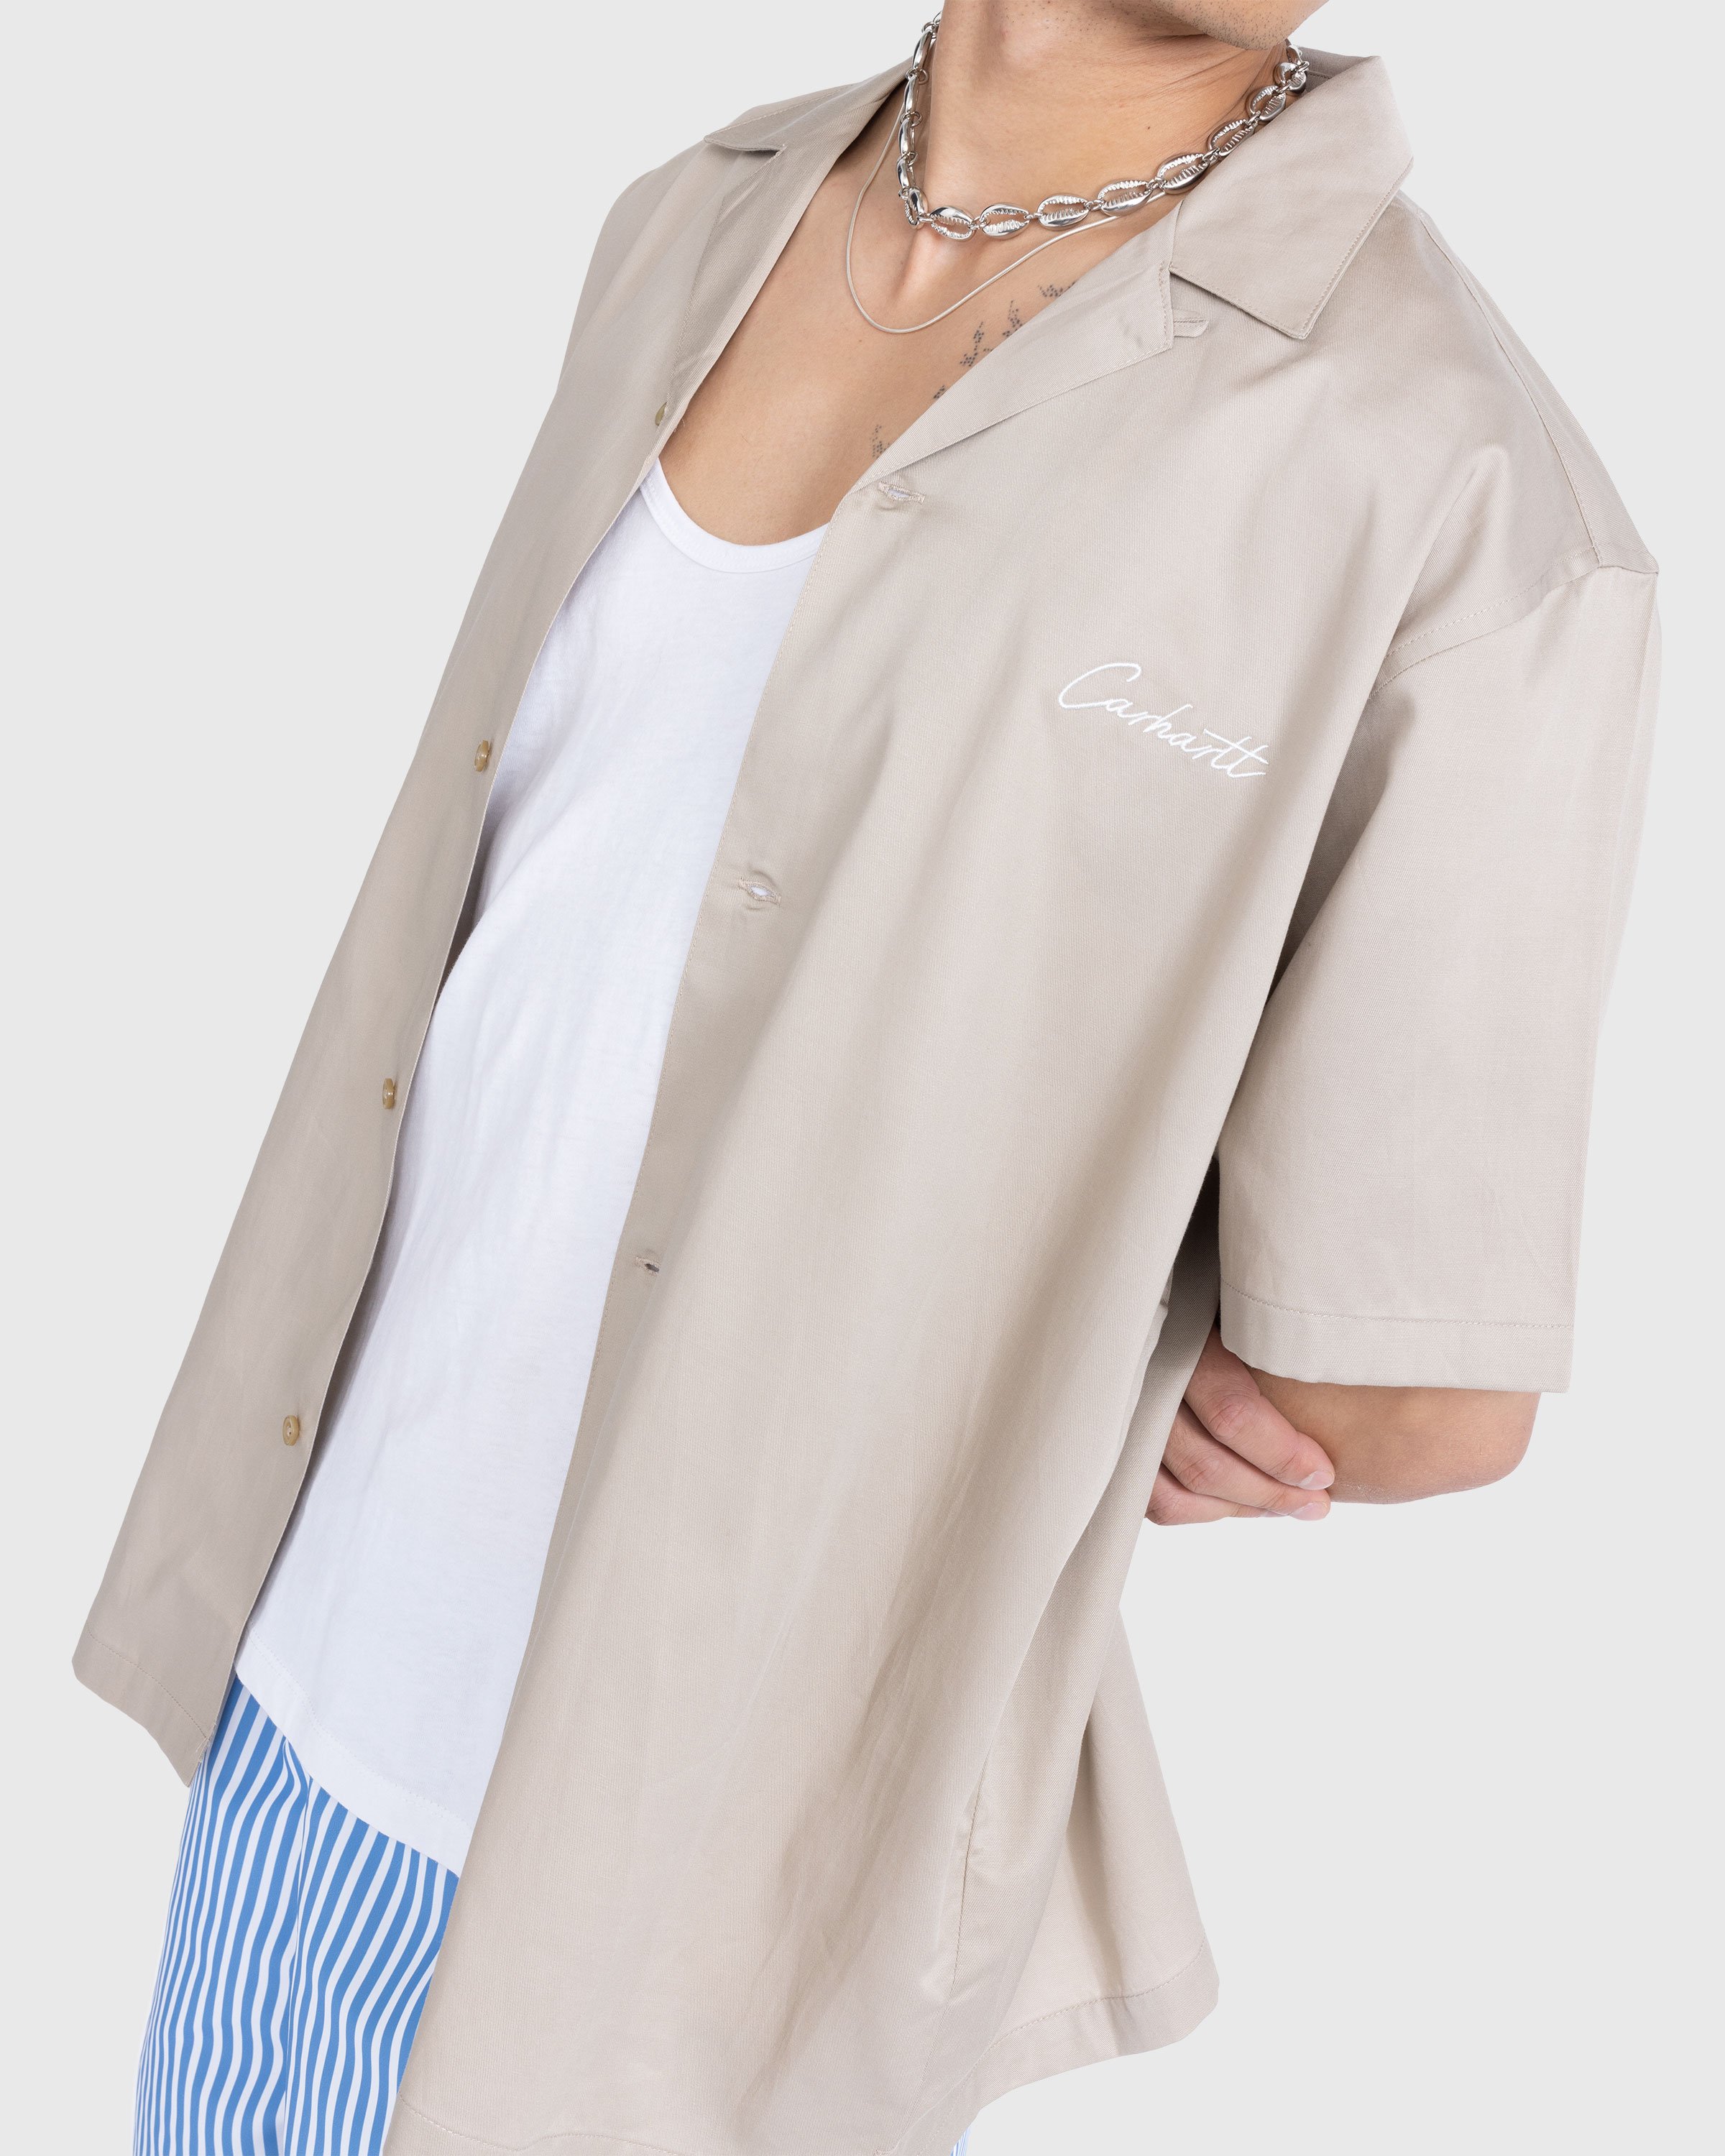 Carhartt WIP - Delray Shirt Wall/Wax - Clothing - Beige - Image 4